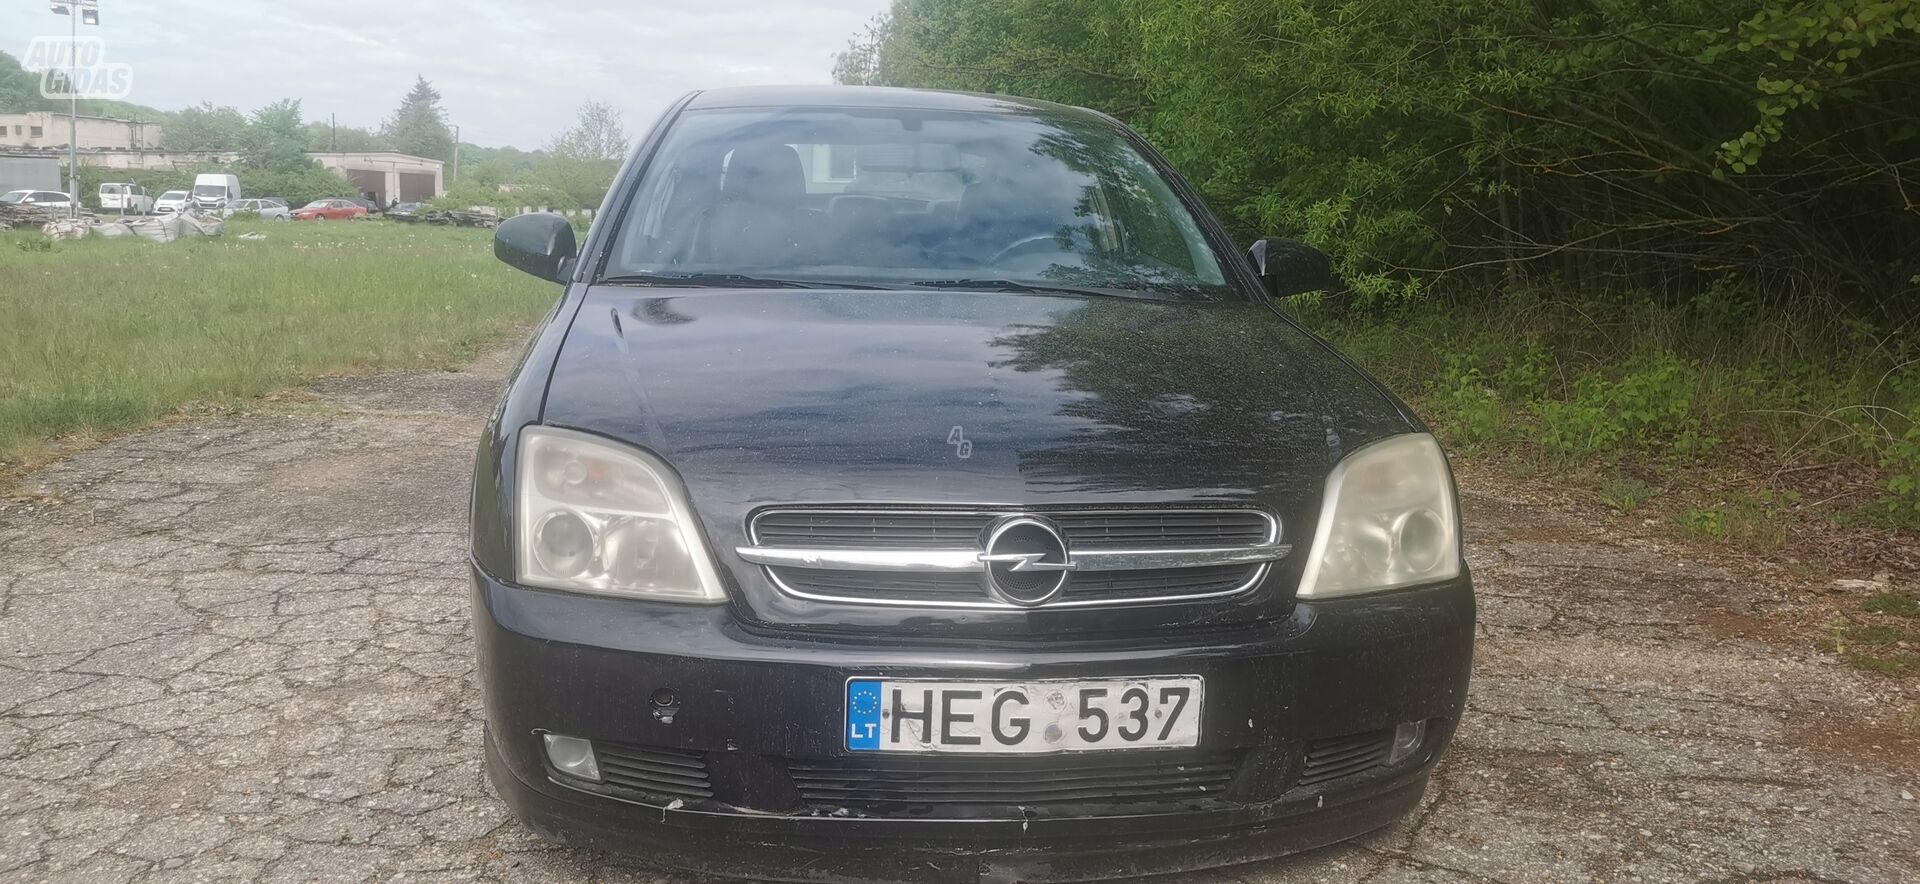 Opel Vectra 2003 г запчясти